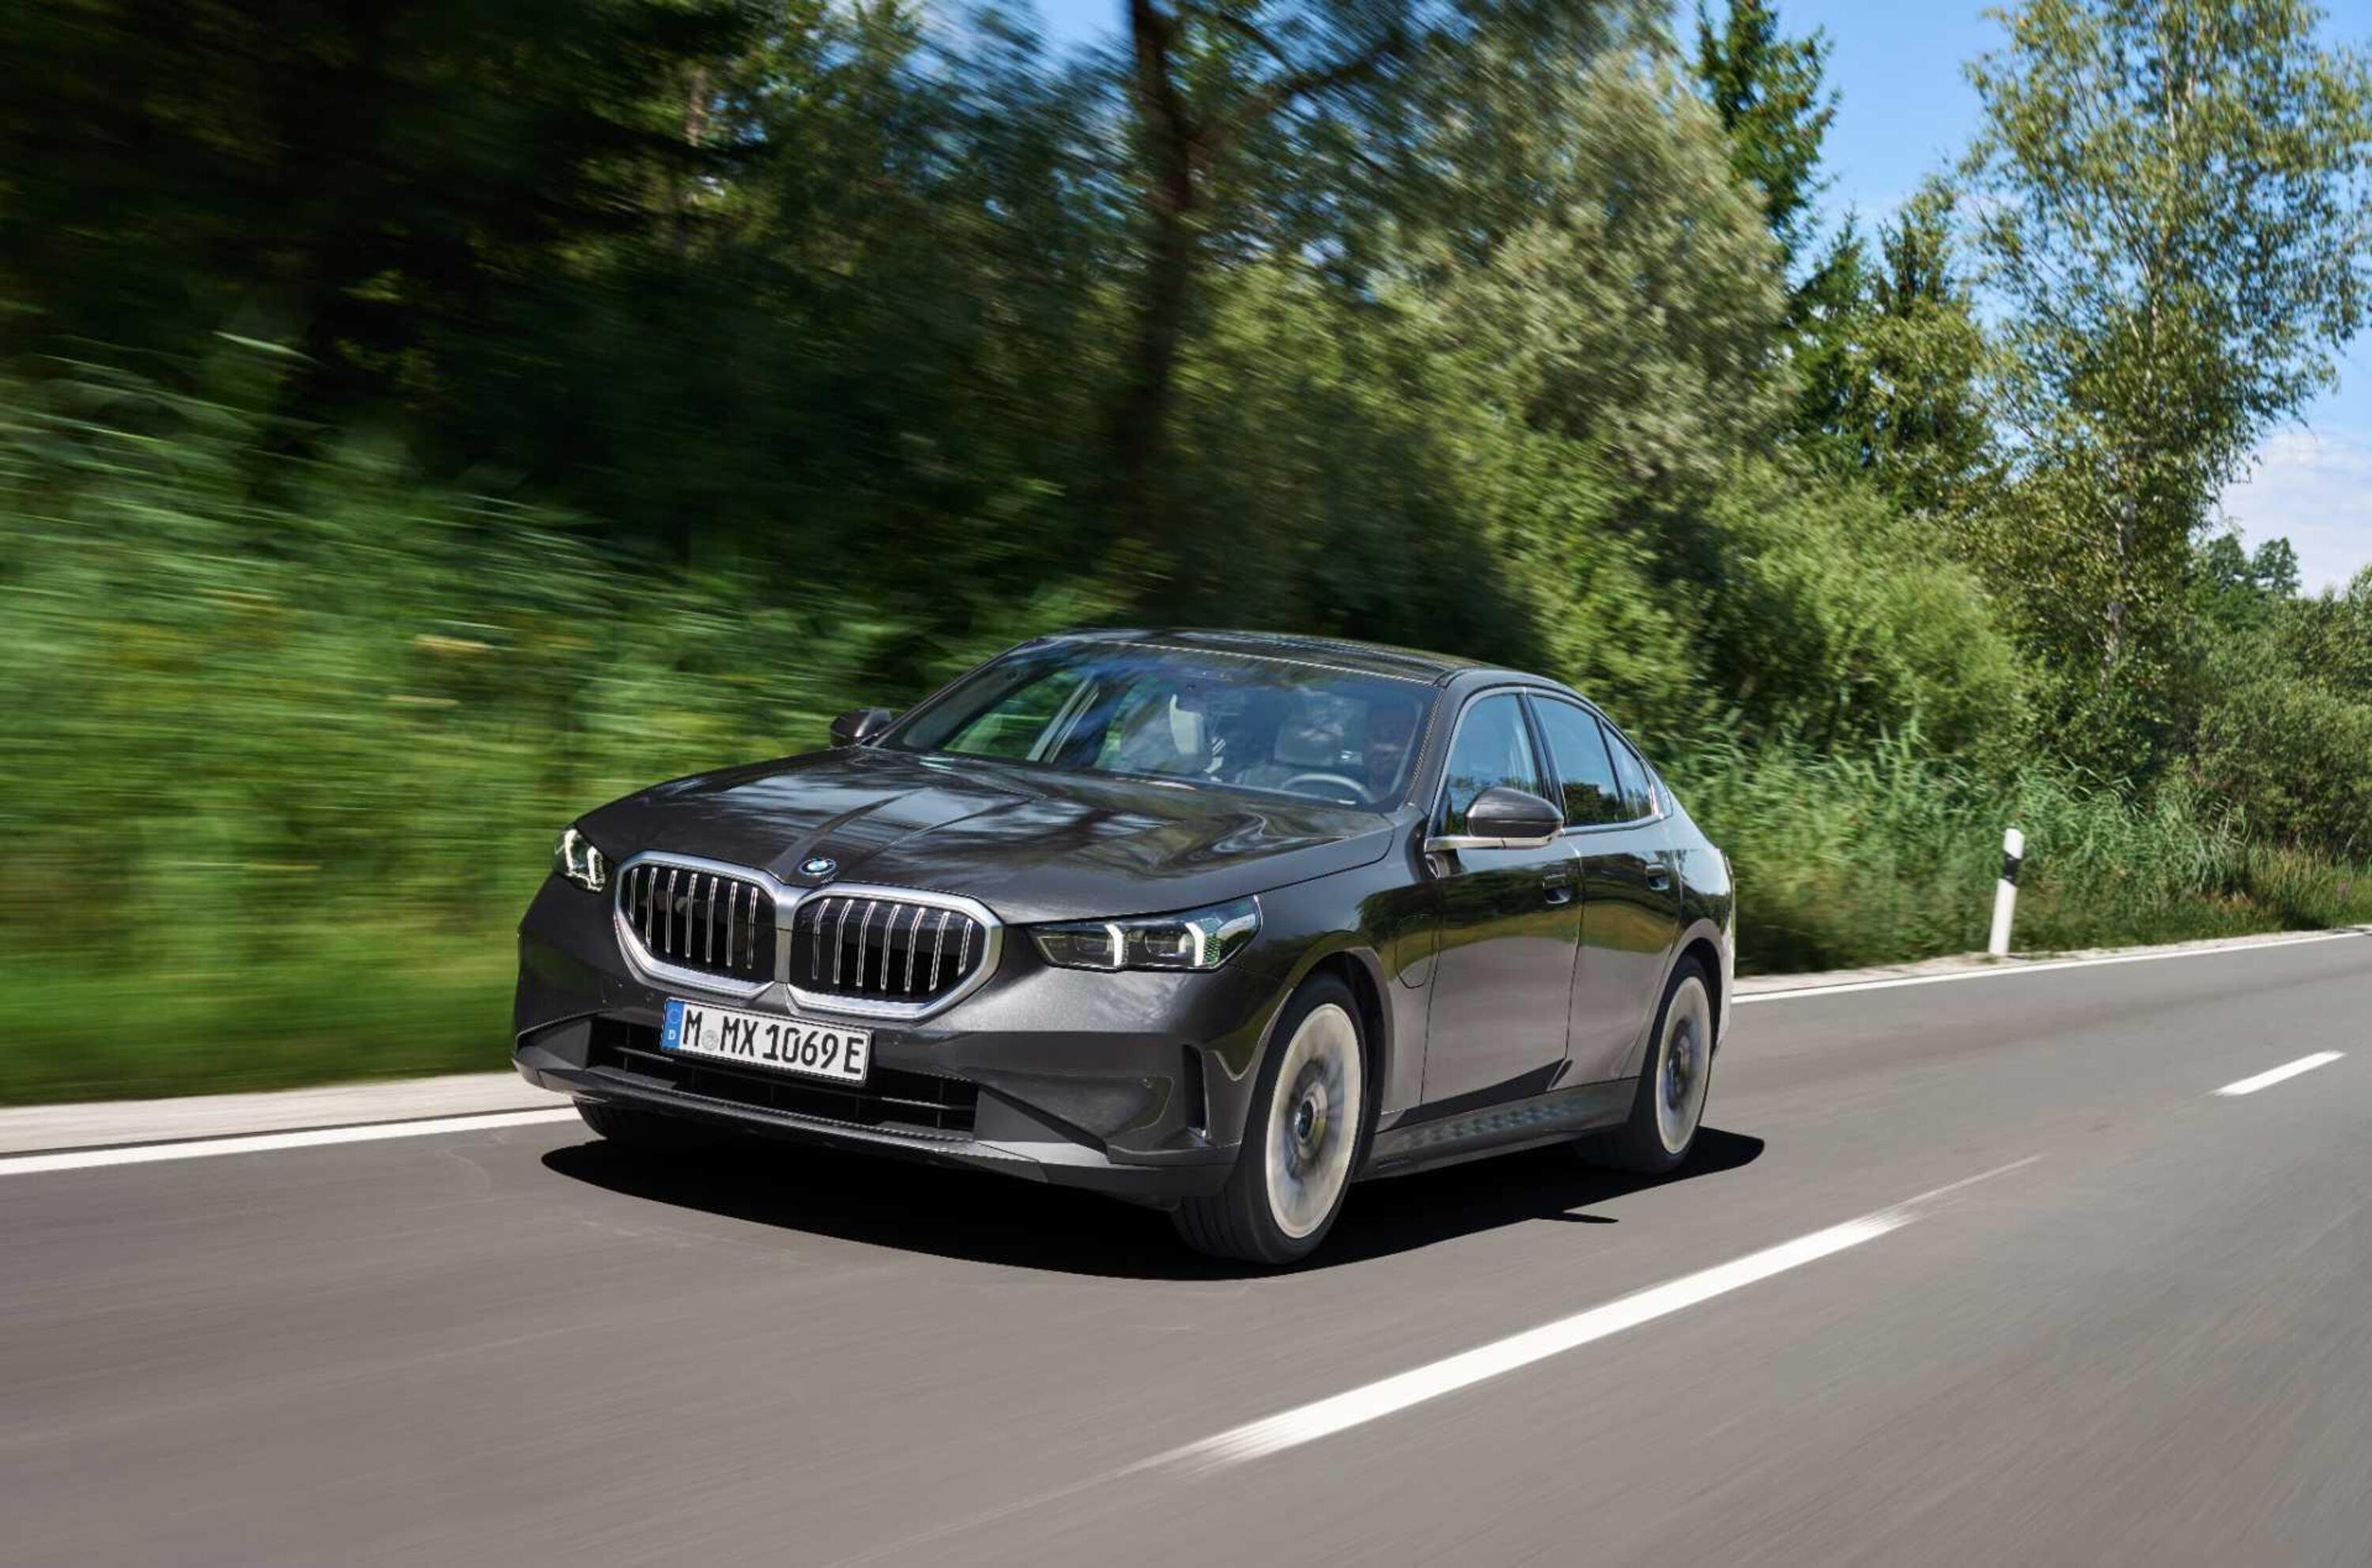 BMW Serie 5: ibrida da 100 km a zero emissioni